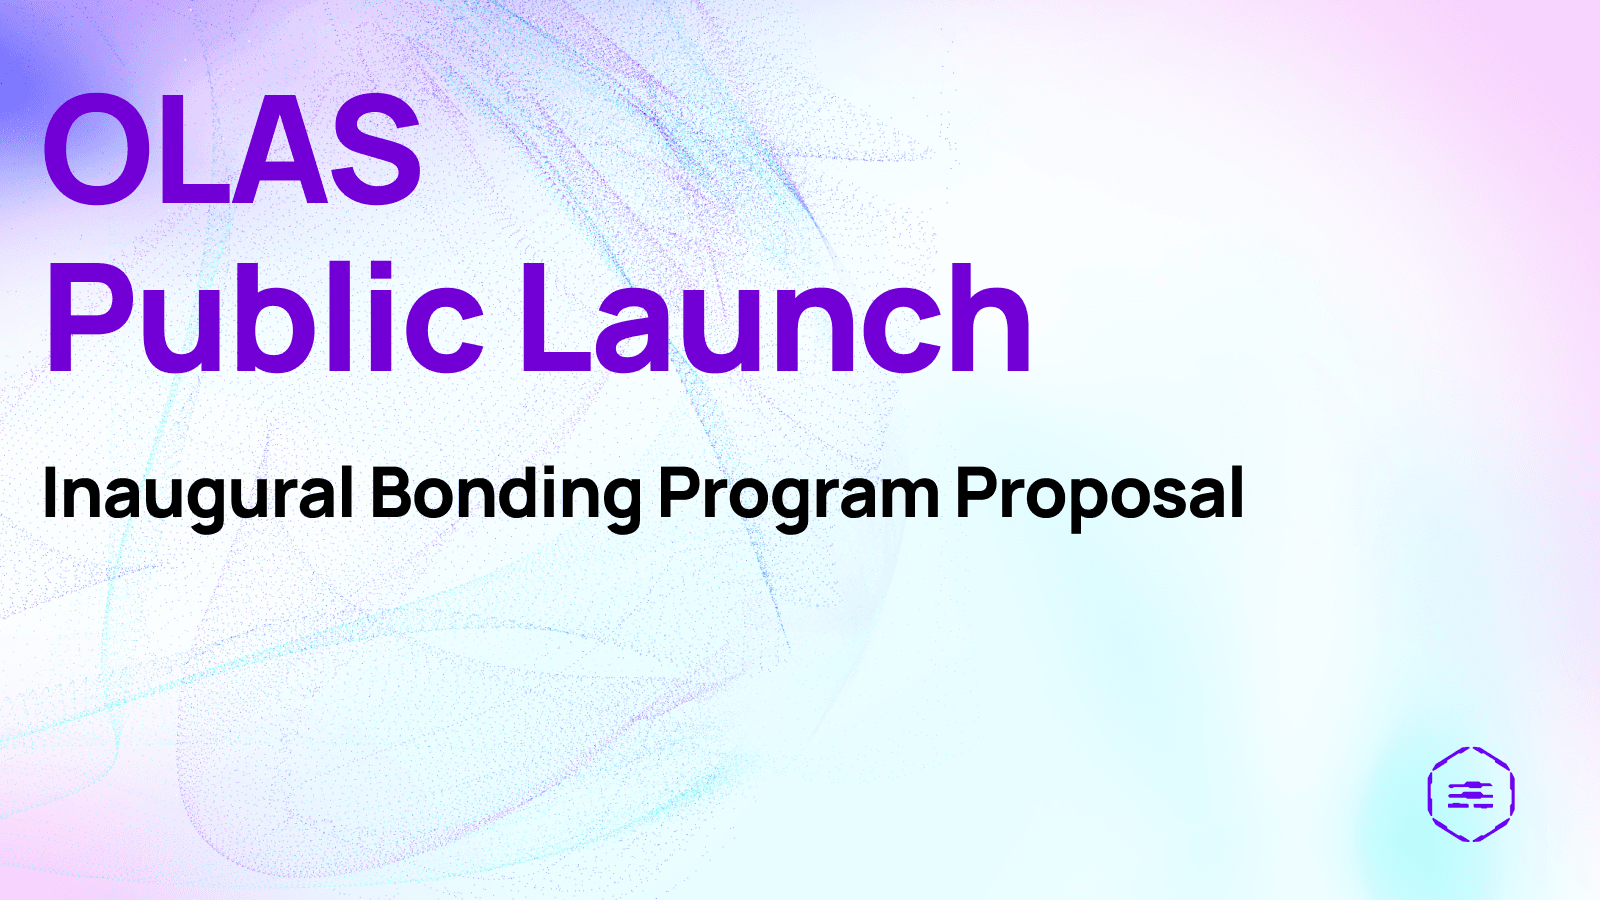 Inaugural Bonding Programme Proposal background image